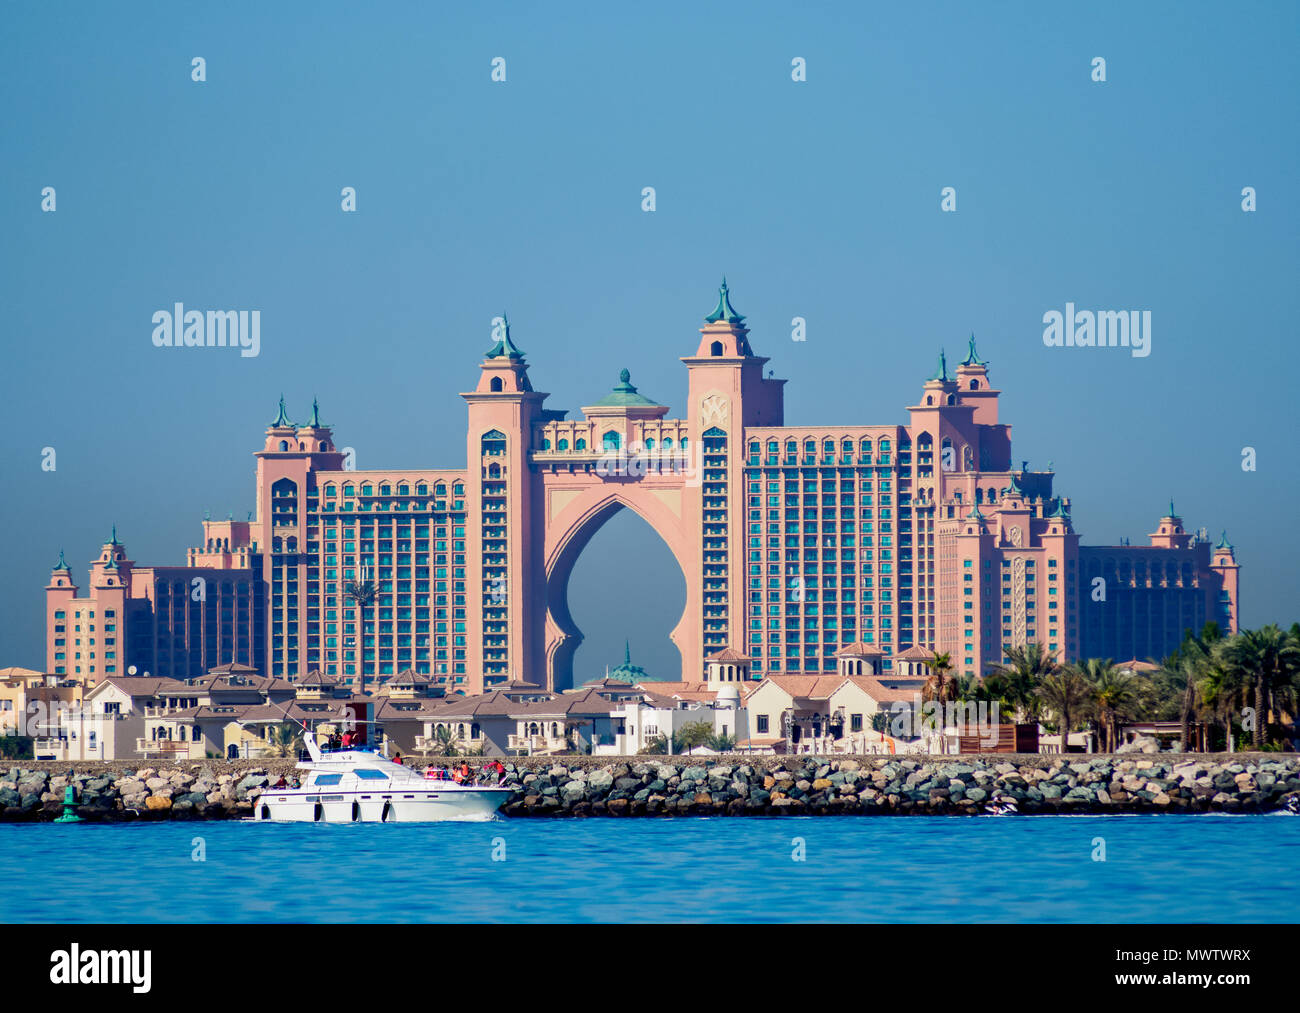 Atlantis The Palm Luxury Hotel, Palm Jumeirah artificial island, Dubai, United Arab Emirates, Middle East Stock Photo